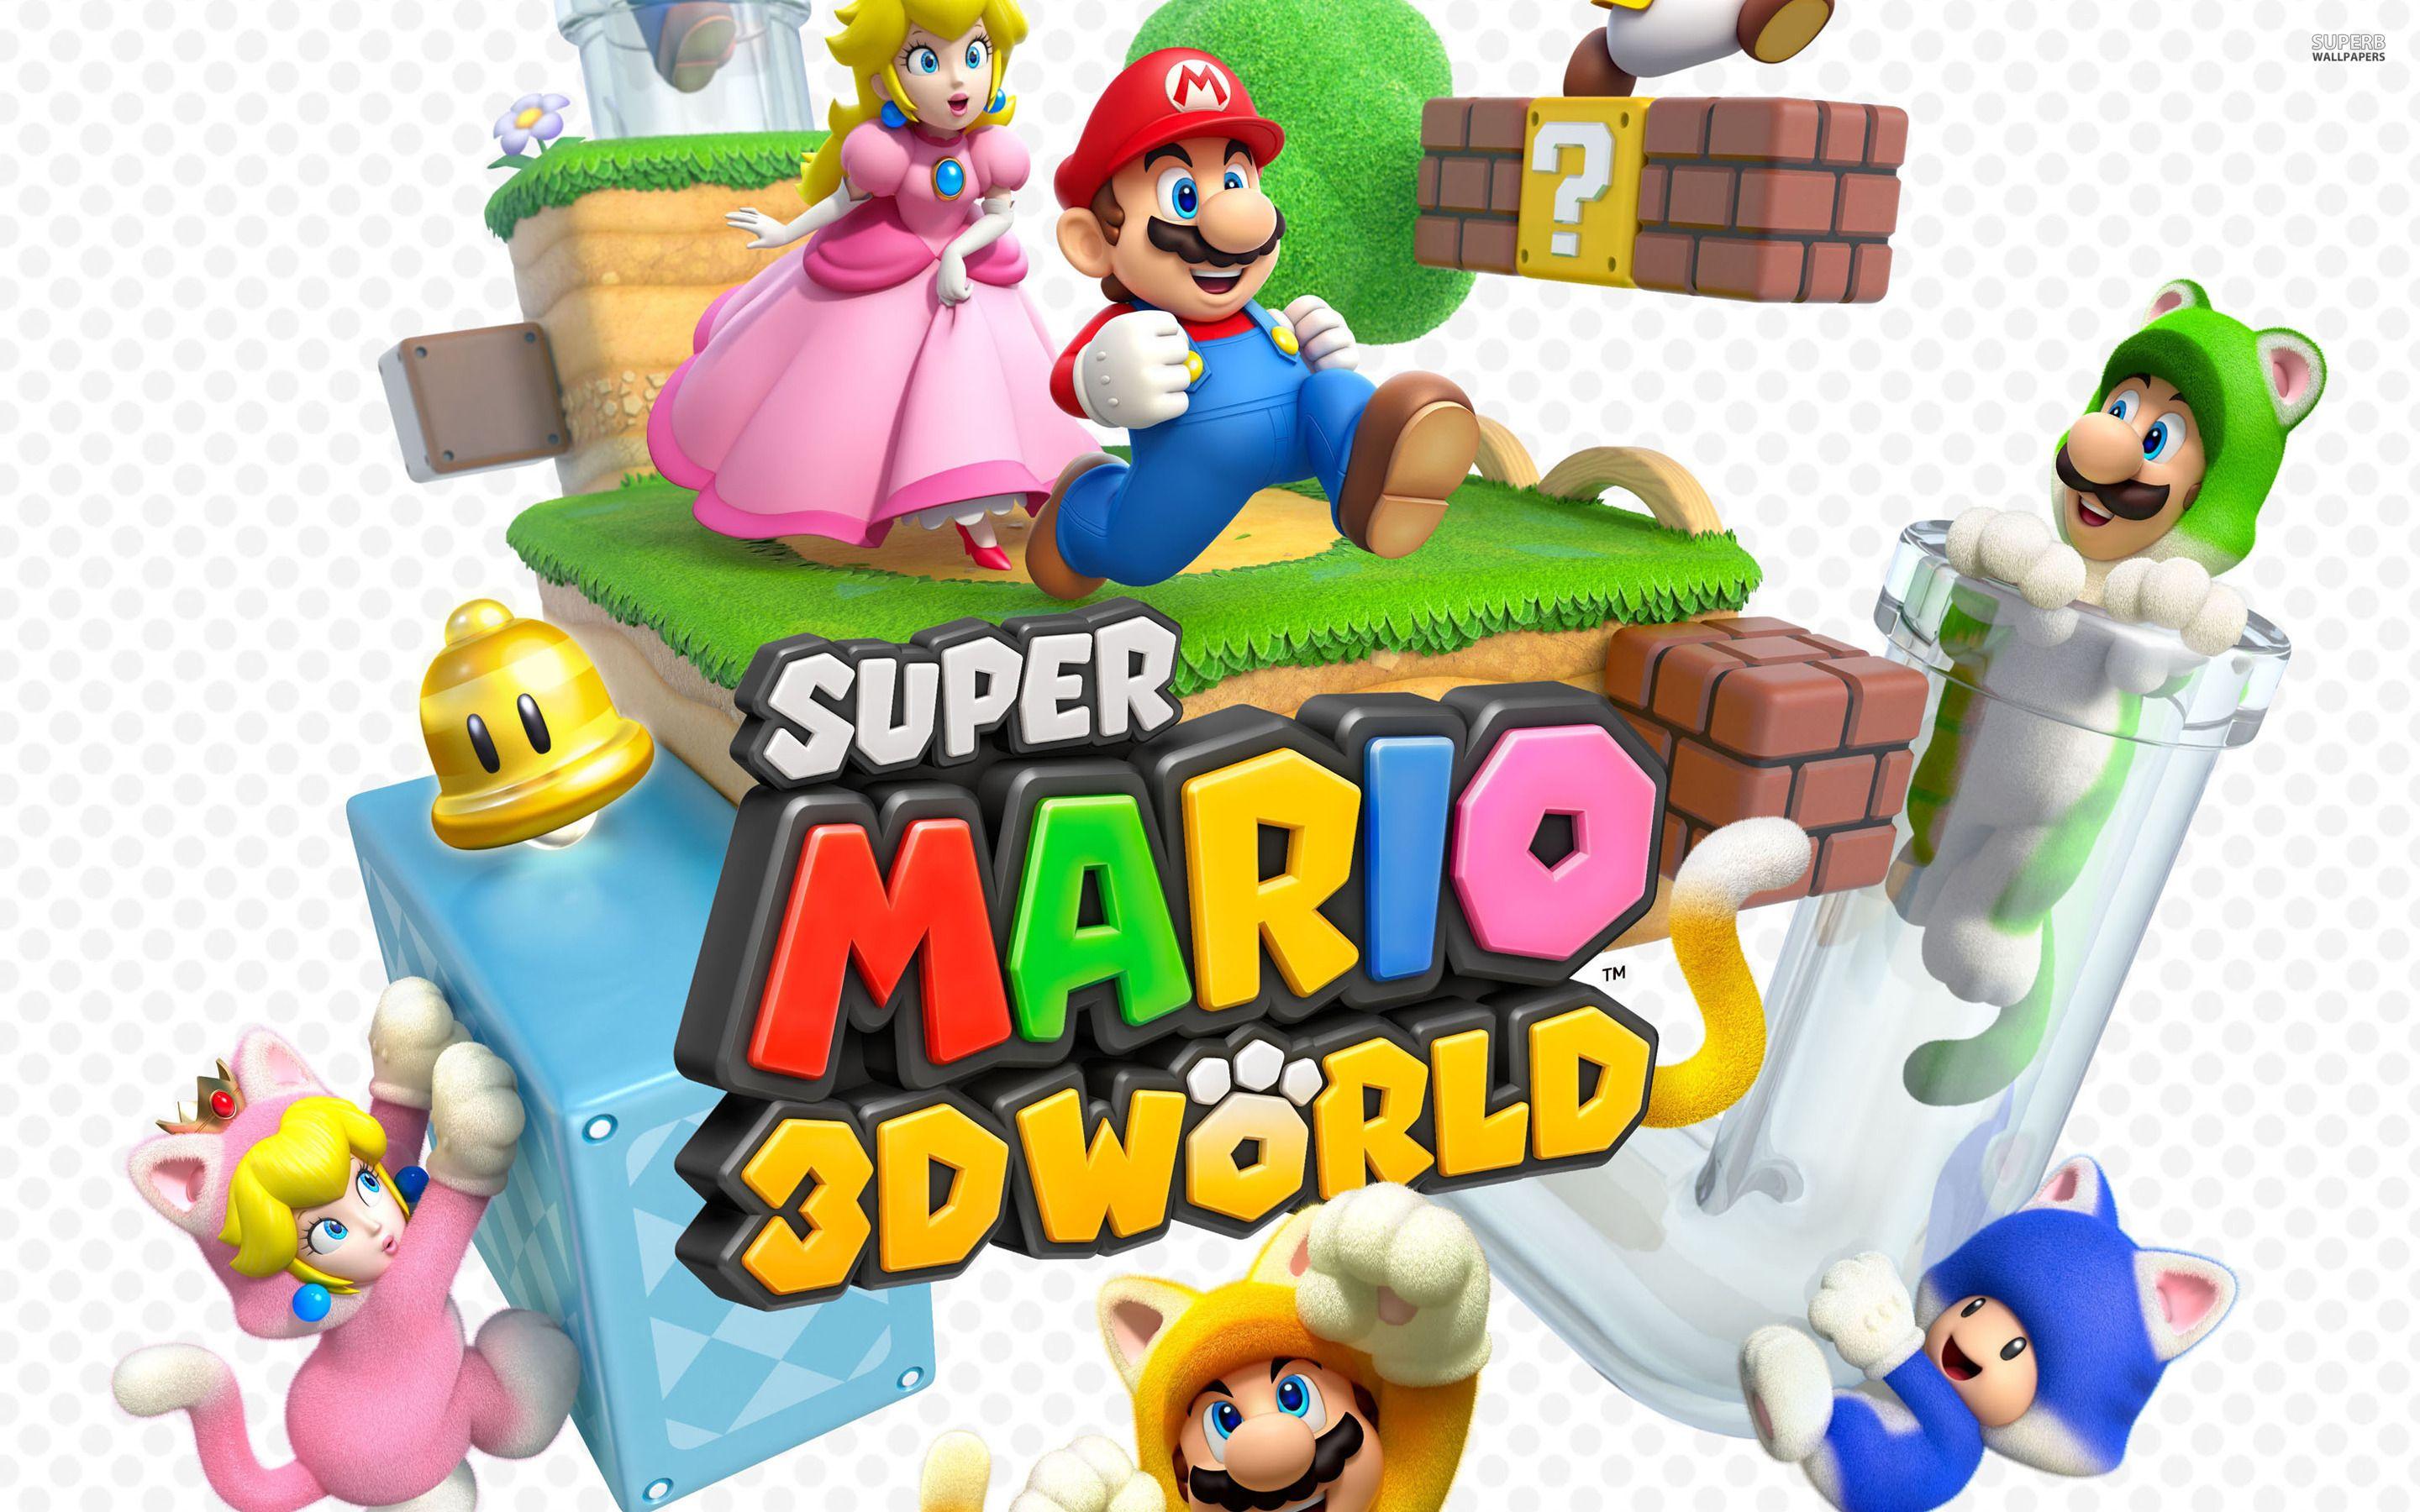 Super Mario 3D World HD Wallpaper, Backgrounds Image